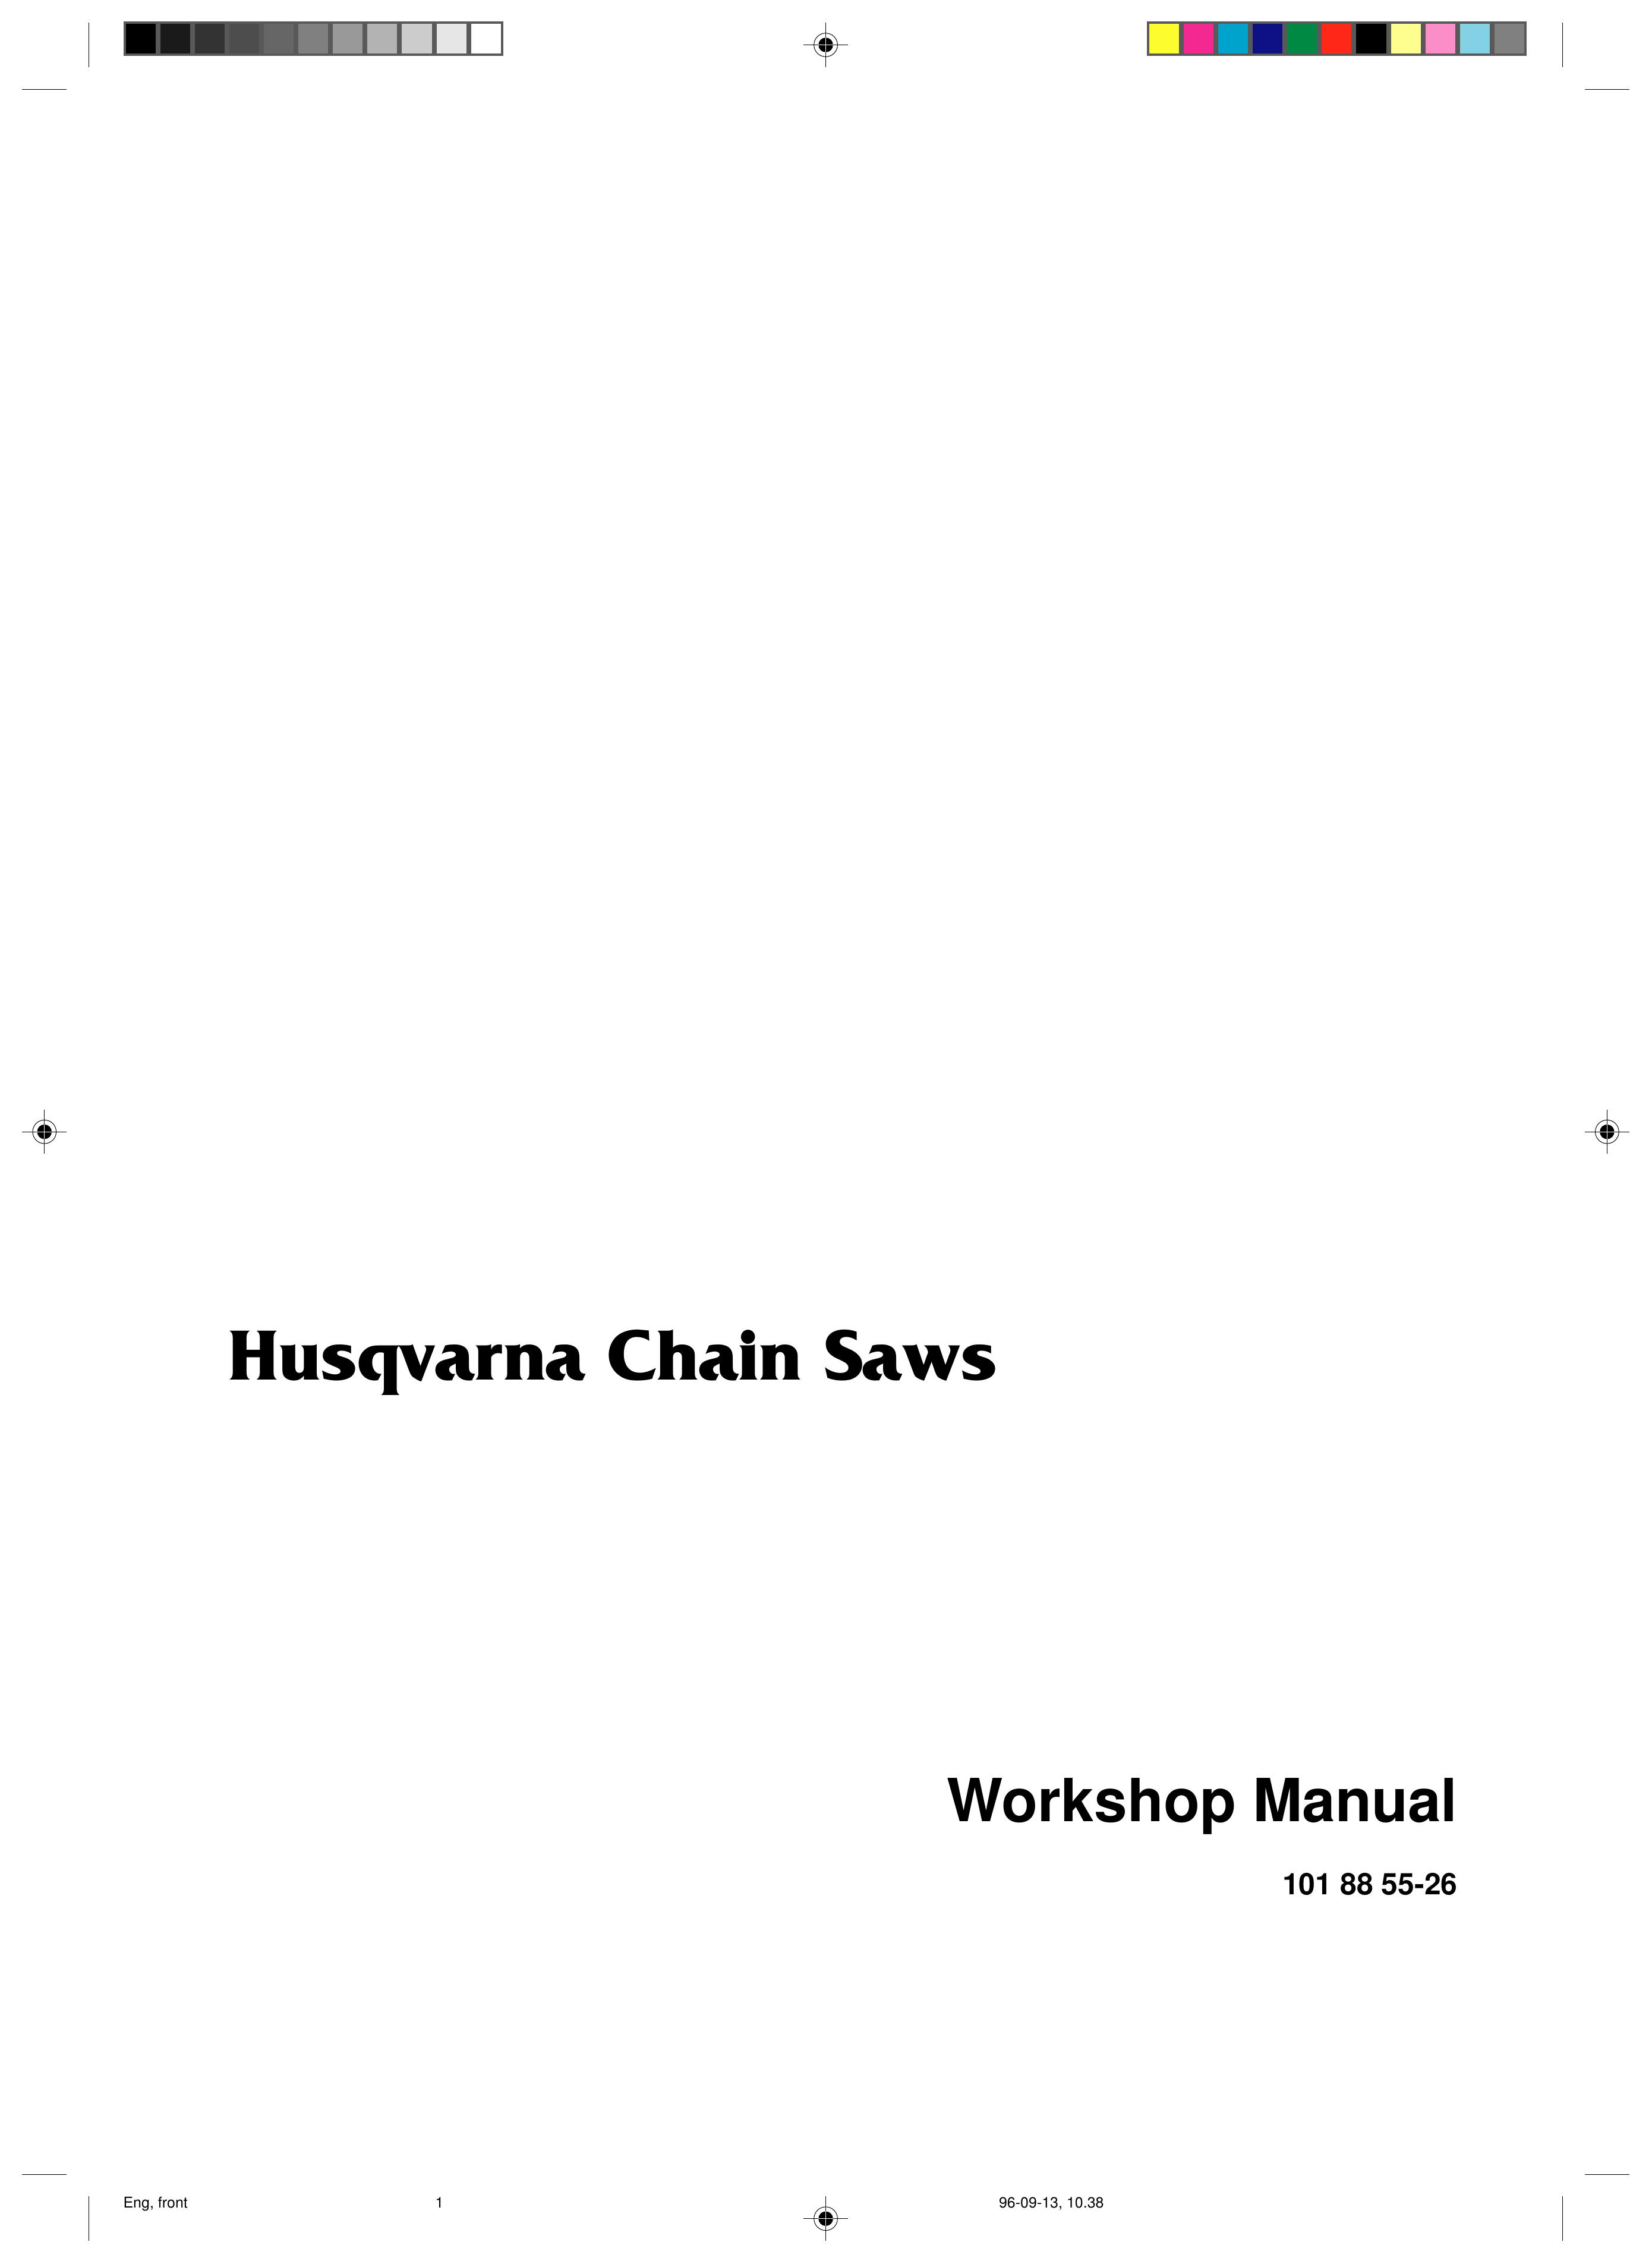 Husqvarna 1018855-26 Chainsaw User Manual